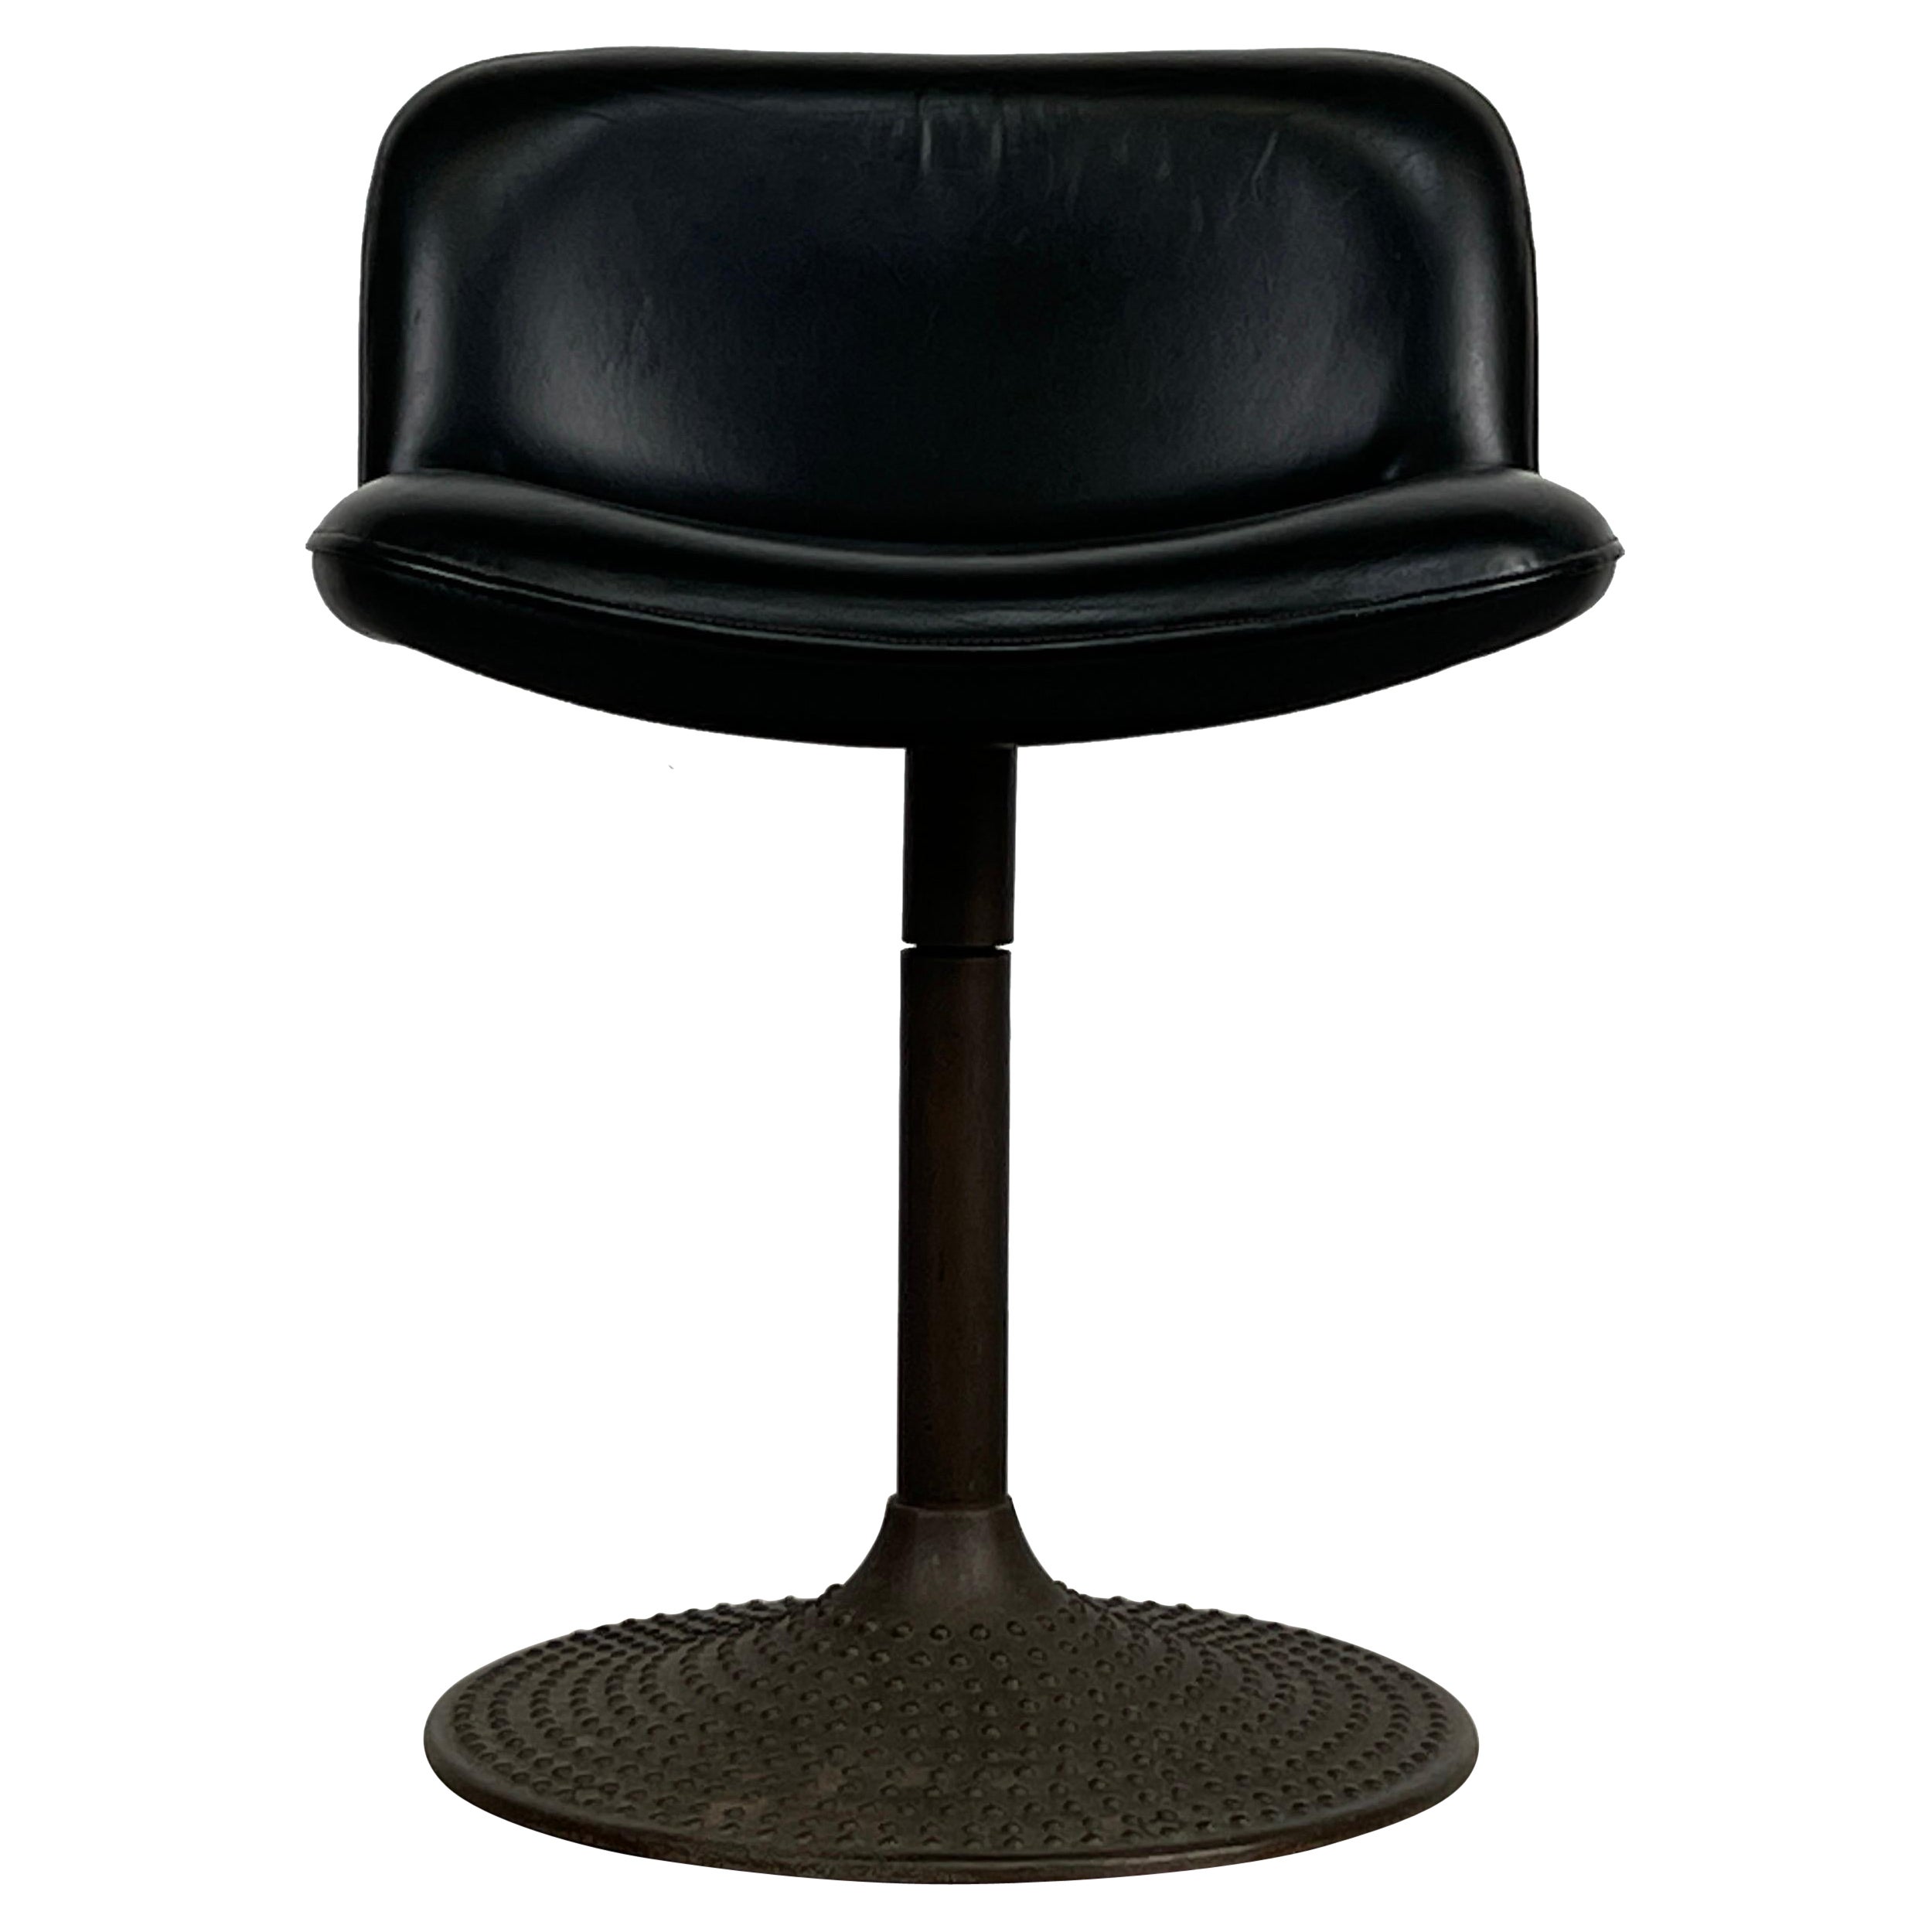 Ilamari Tapiovaara Swiveling Stool / Chair For Sale